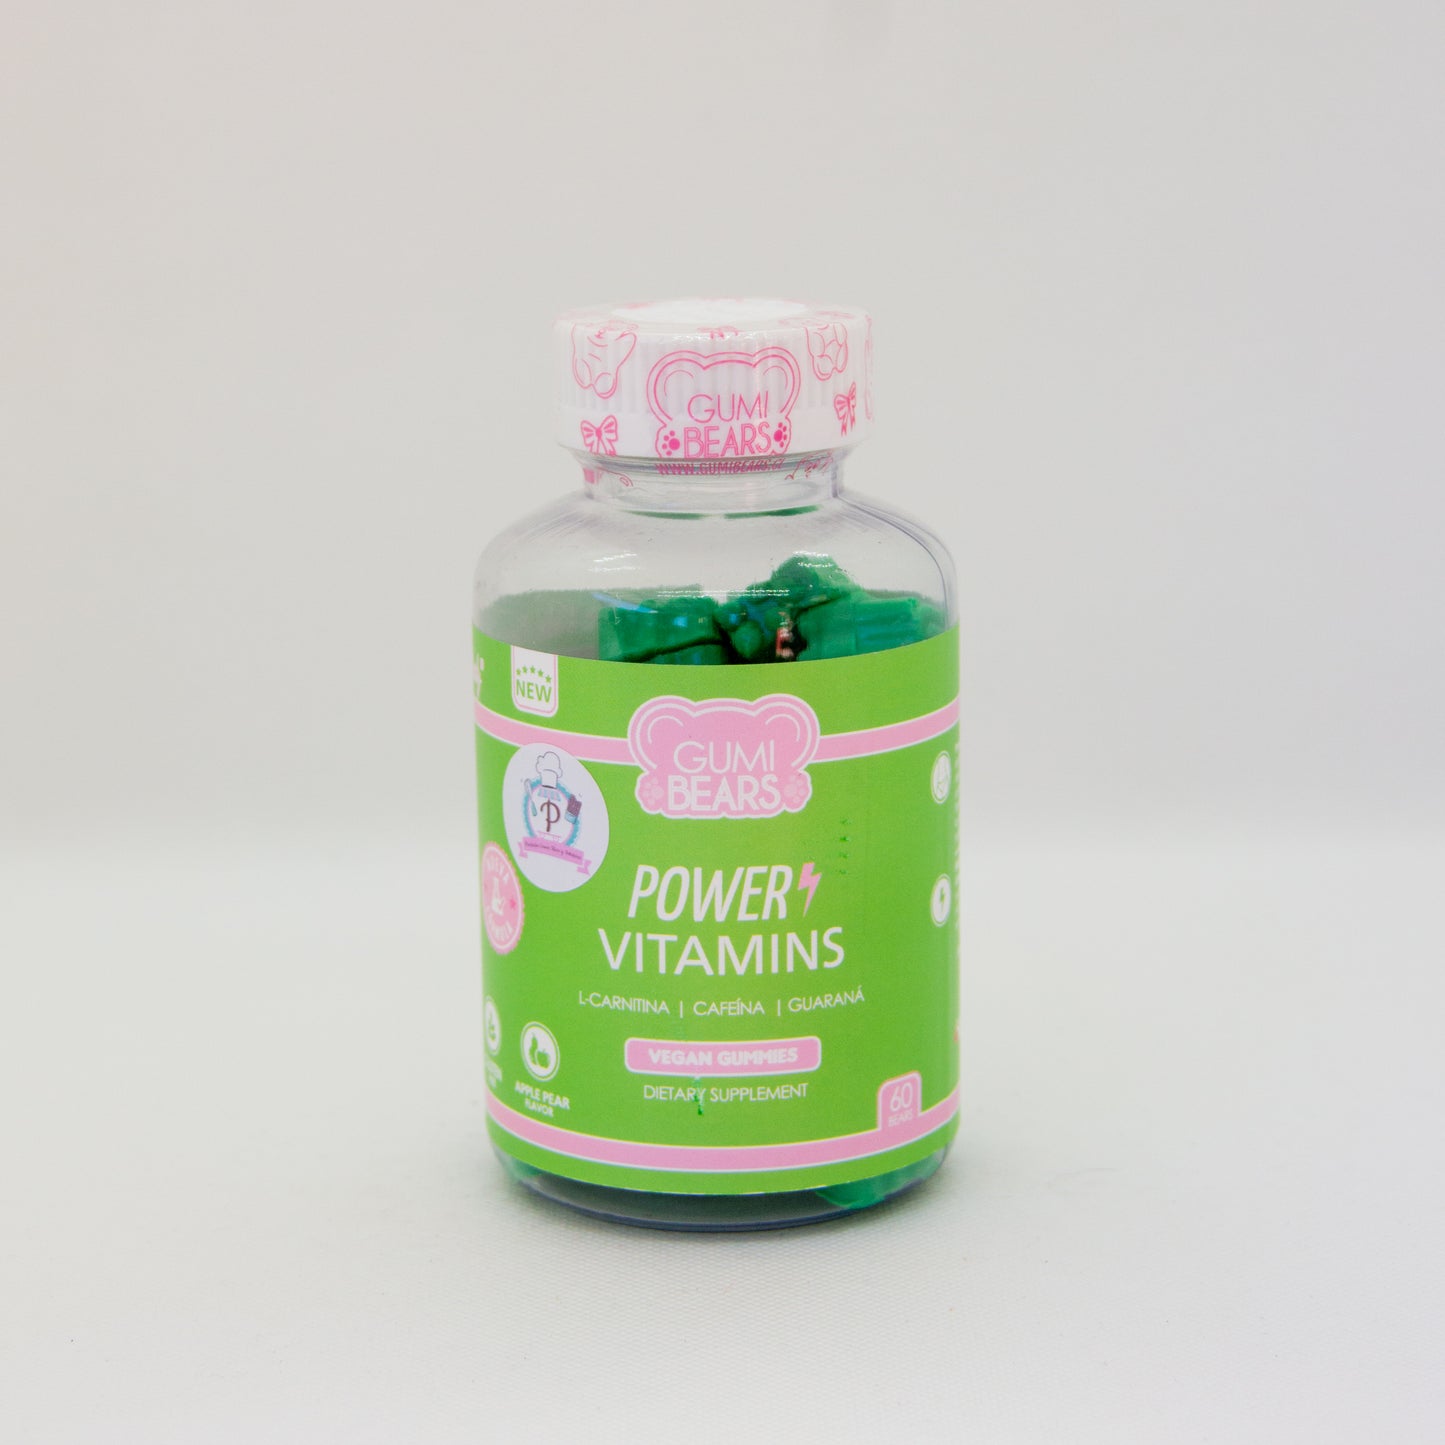 Power Vitamins "Gumi bears"